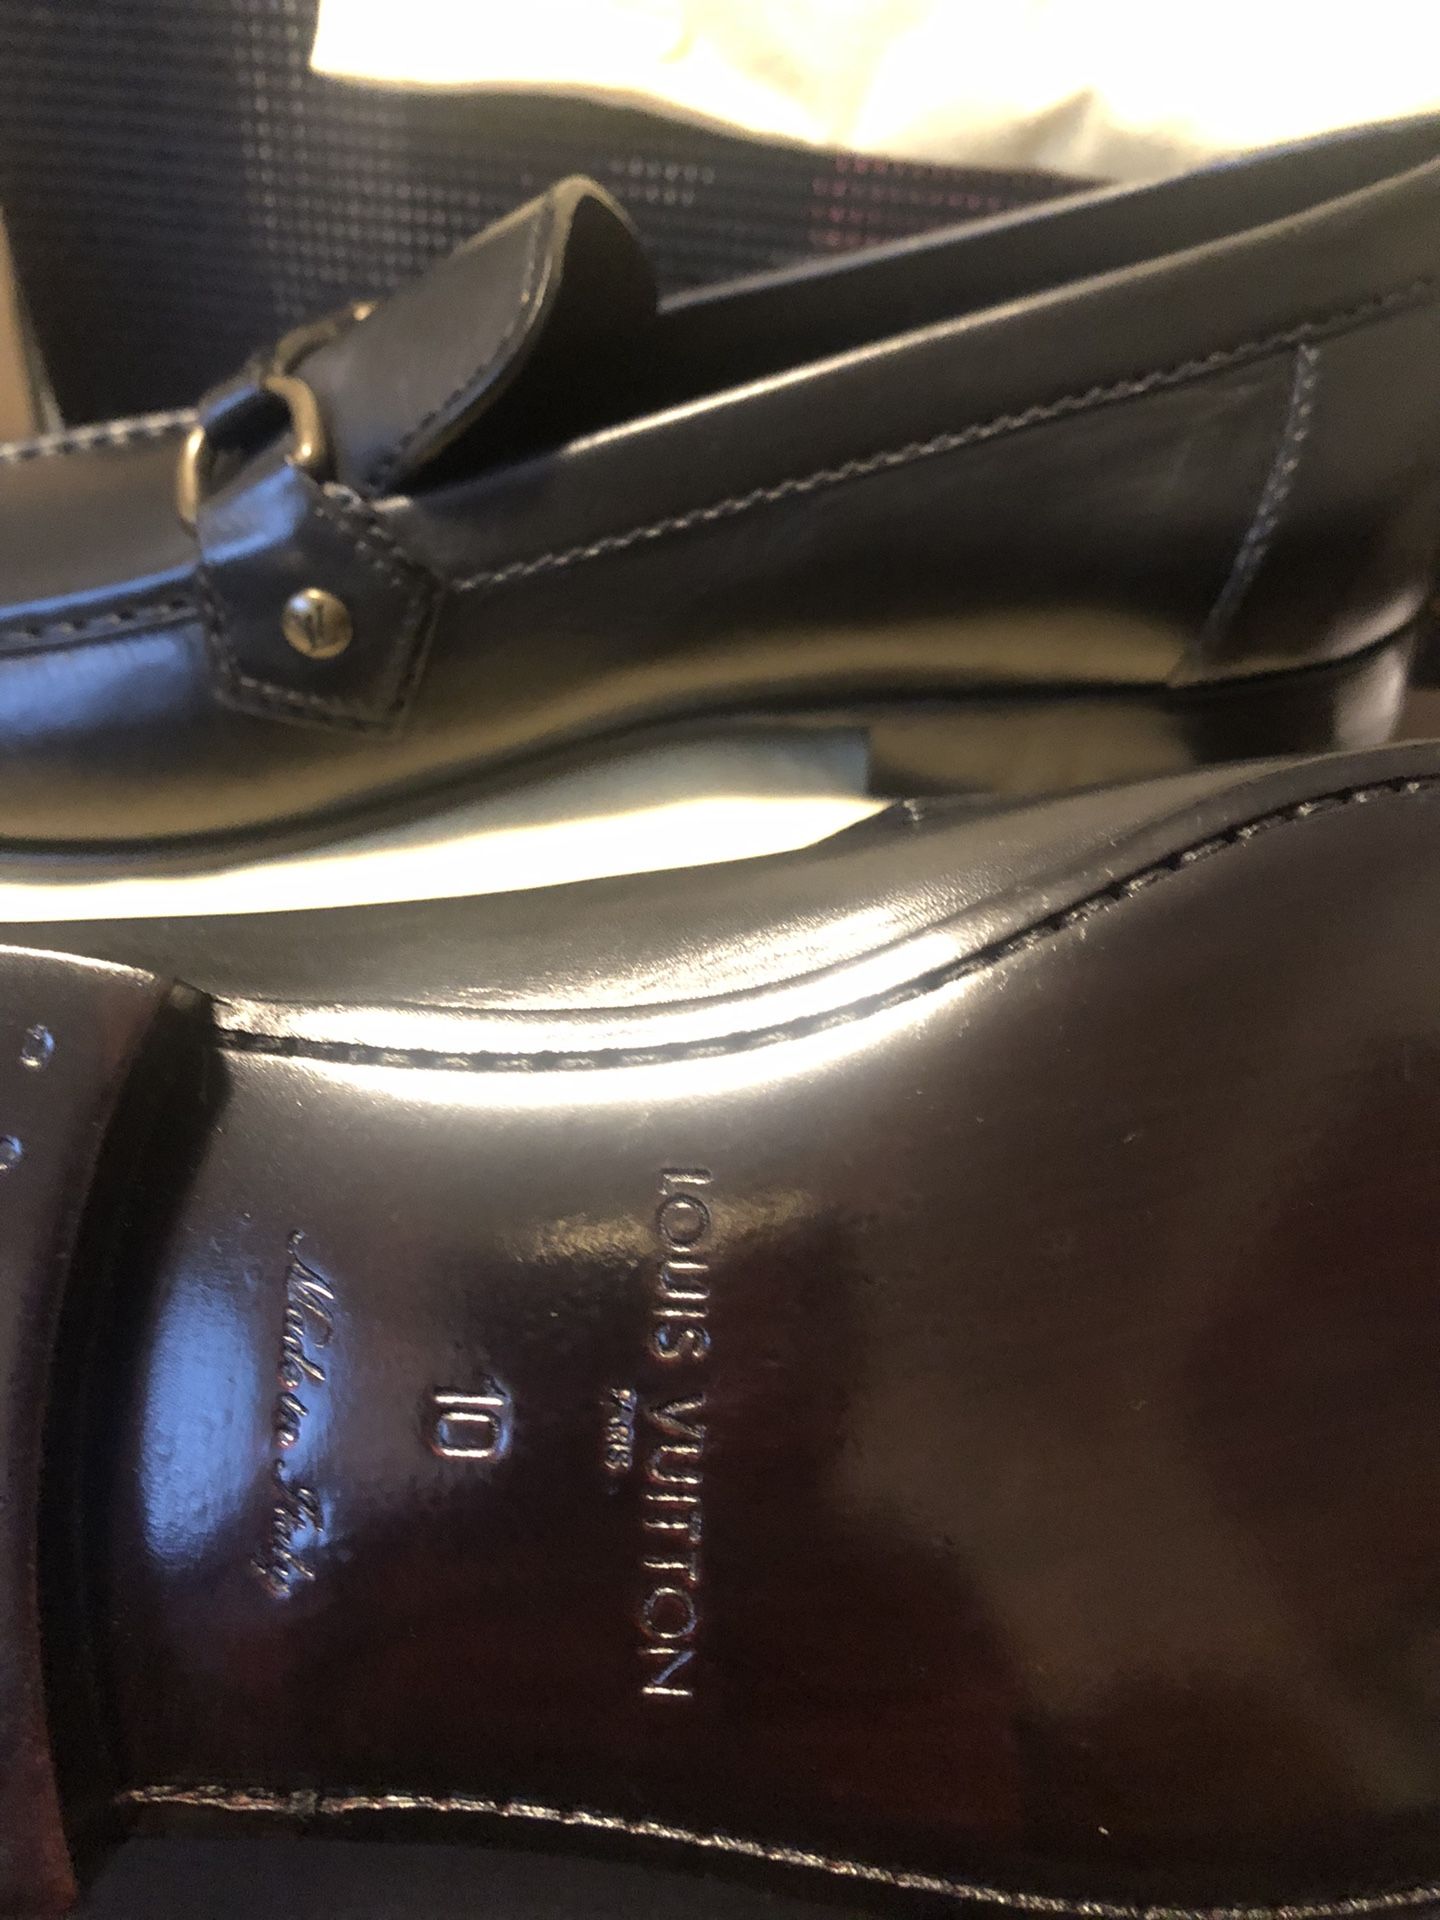 Louis Vuitton Shoes Boots Men Size 9.5 (43) for Sale in Fort Lauderdale, FL  - OfferUp